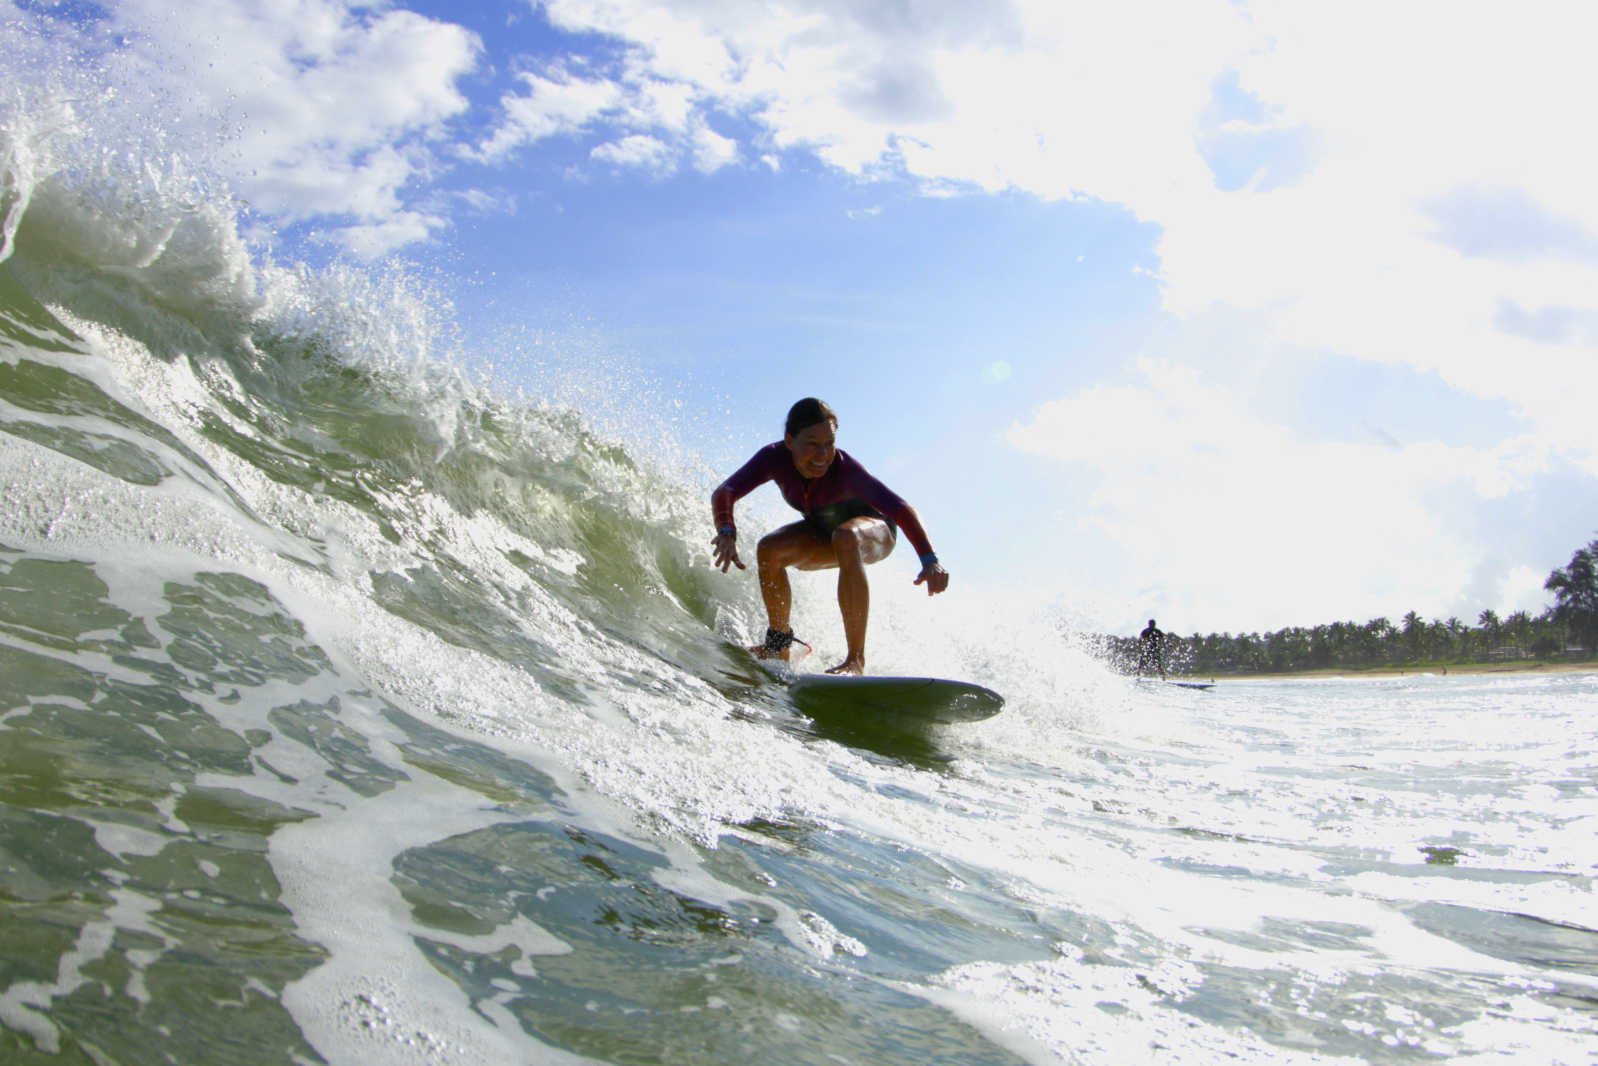 Noelle Salmi rides a wave in Hanalei Bay - Kauia, HI. Photograph by Ry Cowan.